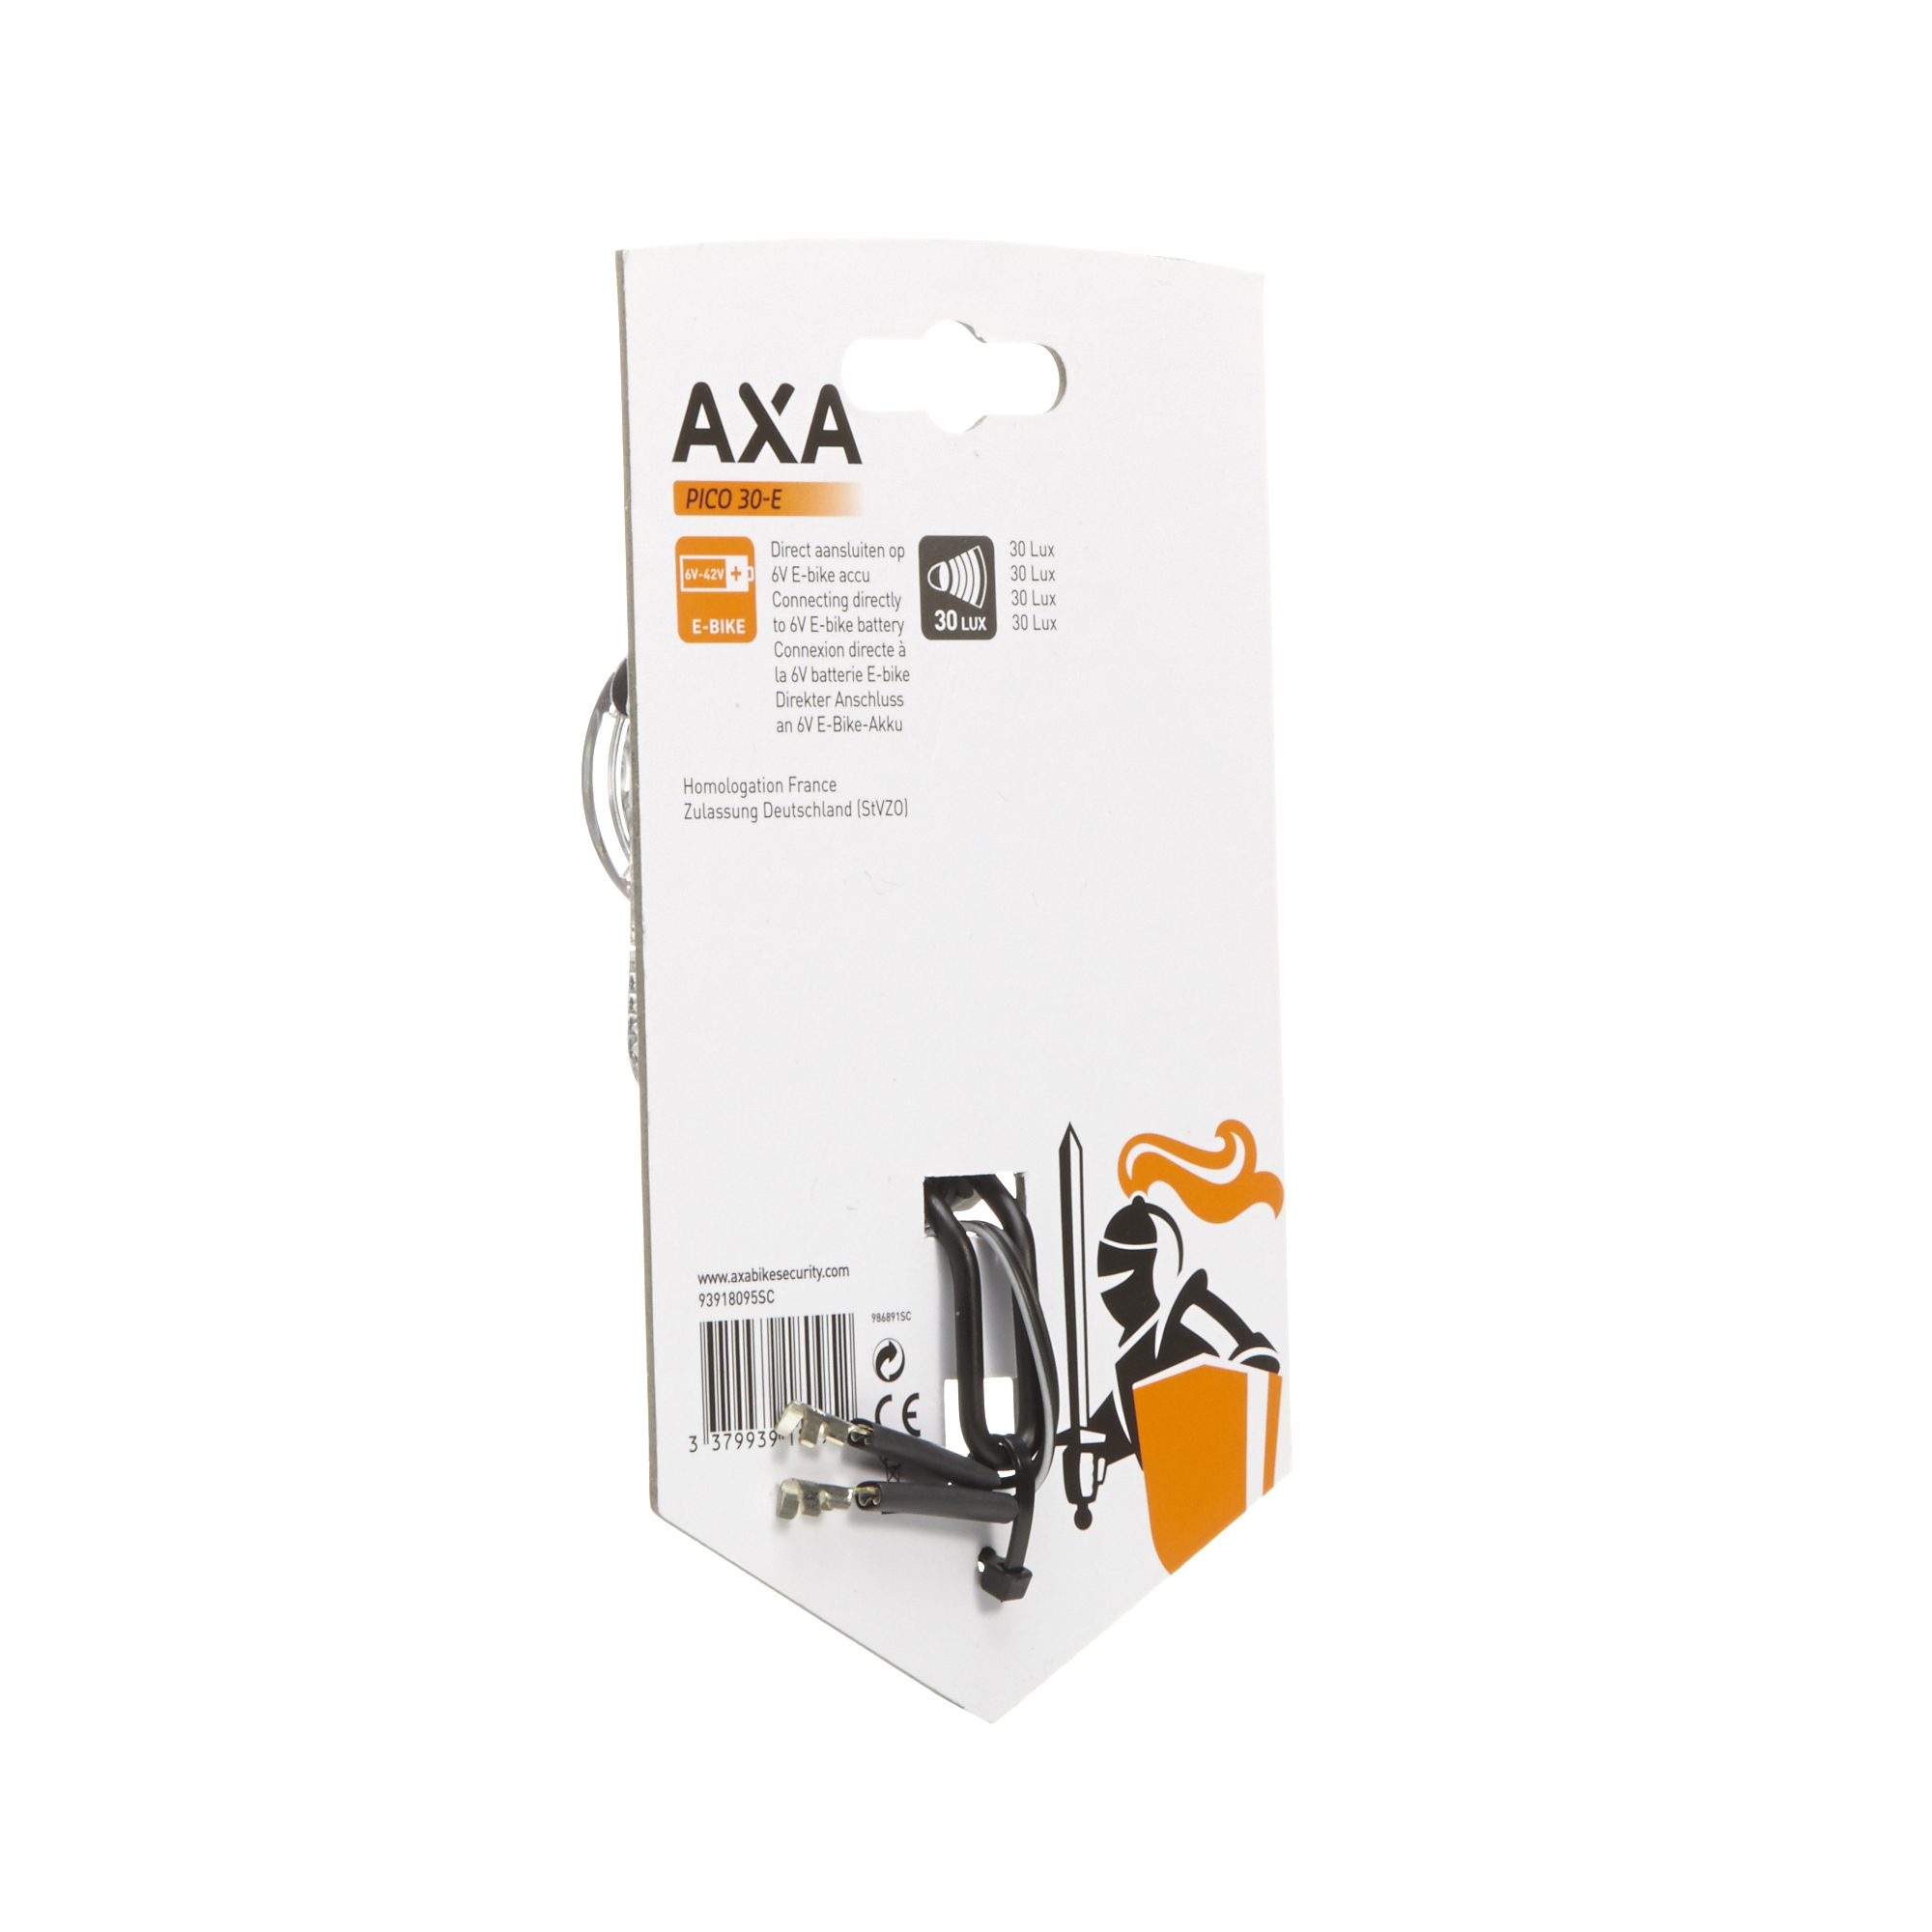 Axa LED-phares /"pico 30 steady switch/" pour moyeu dynamo